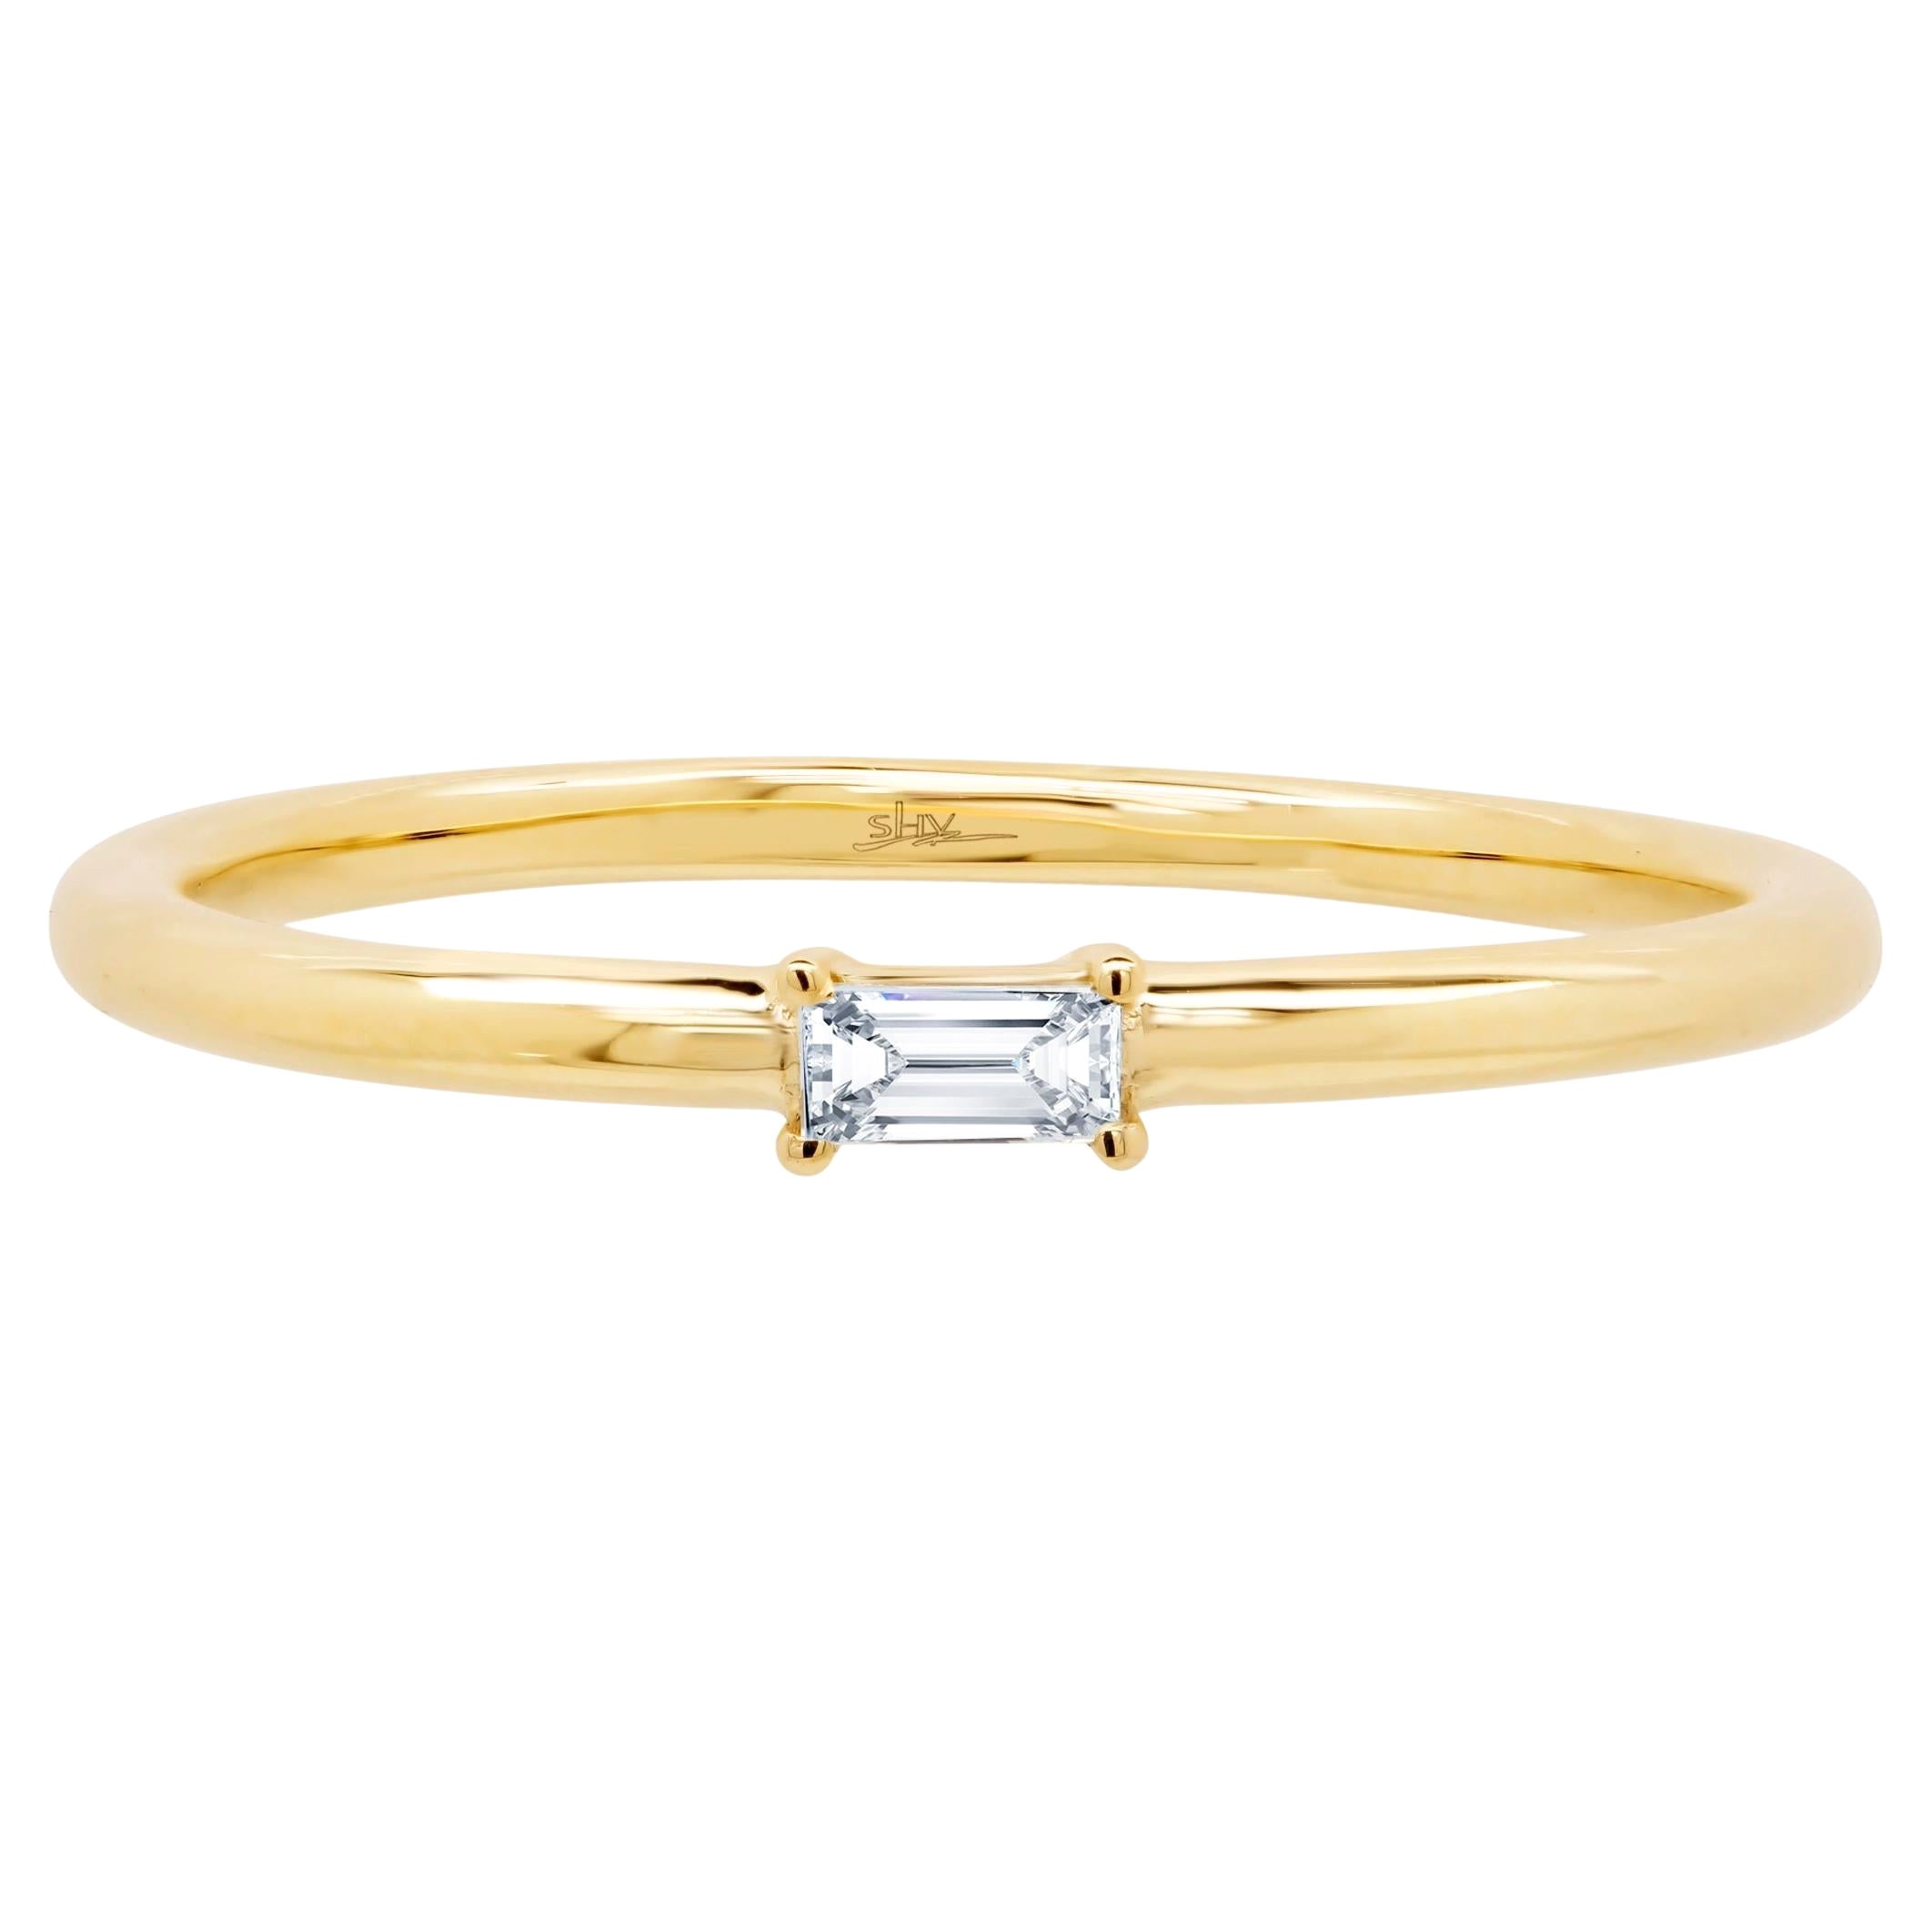 Rachel Koen Baguette Cut  Diamond Ring 14K Yellow Gold 0.07cttw For Sale